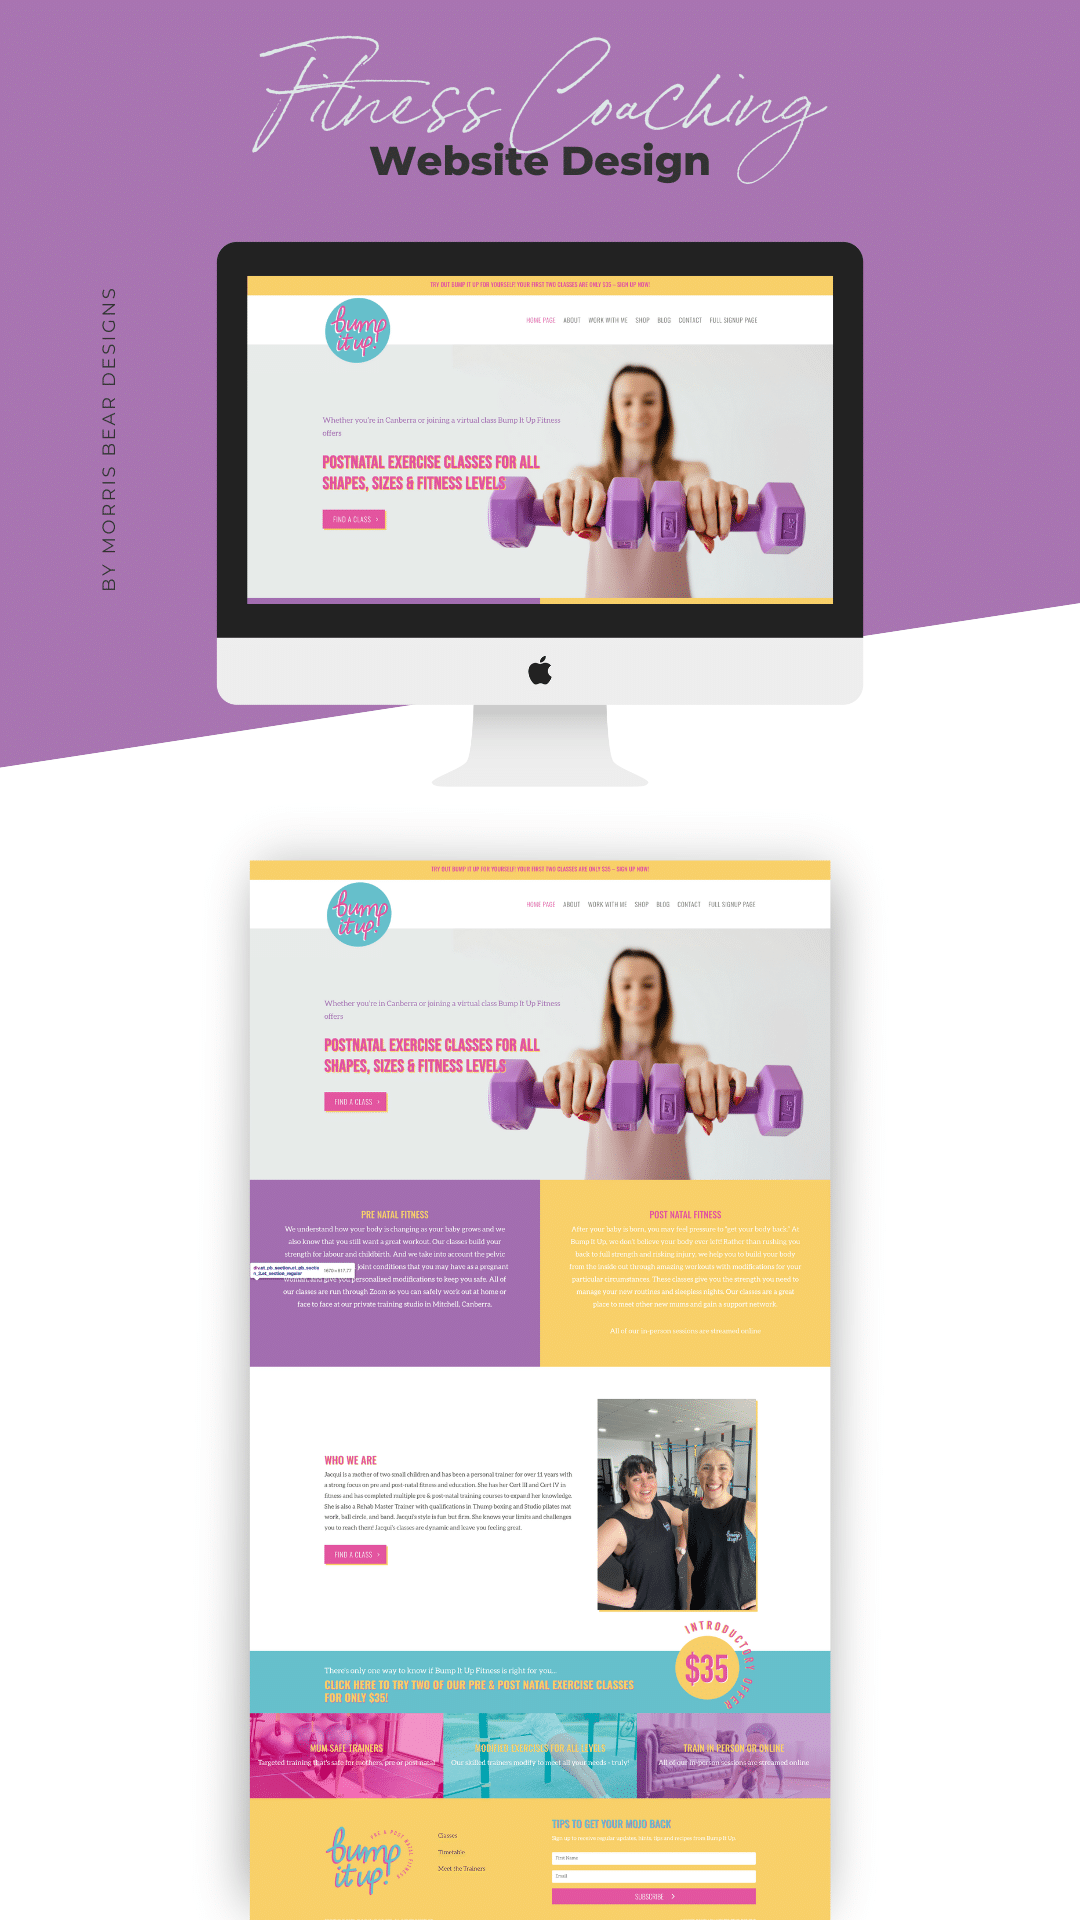 Wordpress Website design for fitness coach - website design in a day sales page design